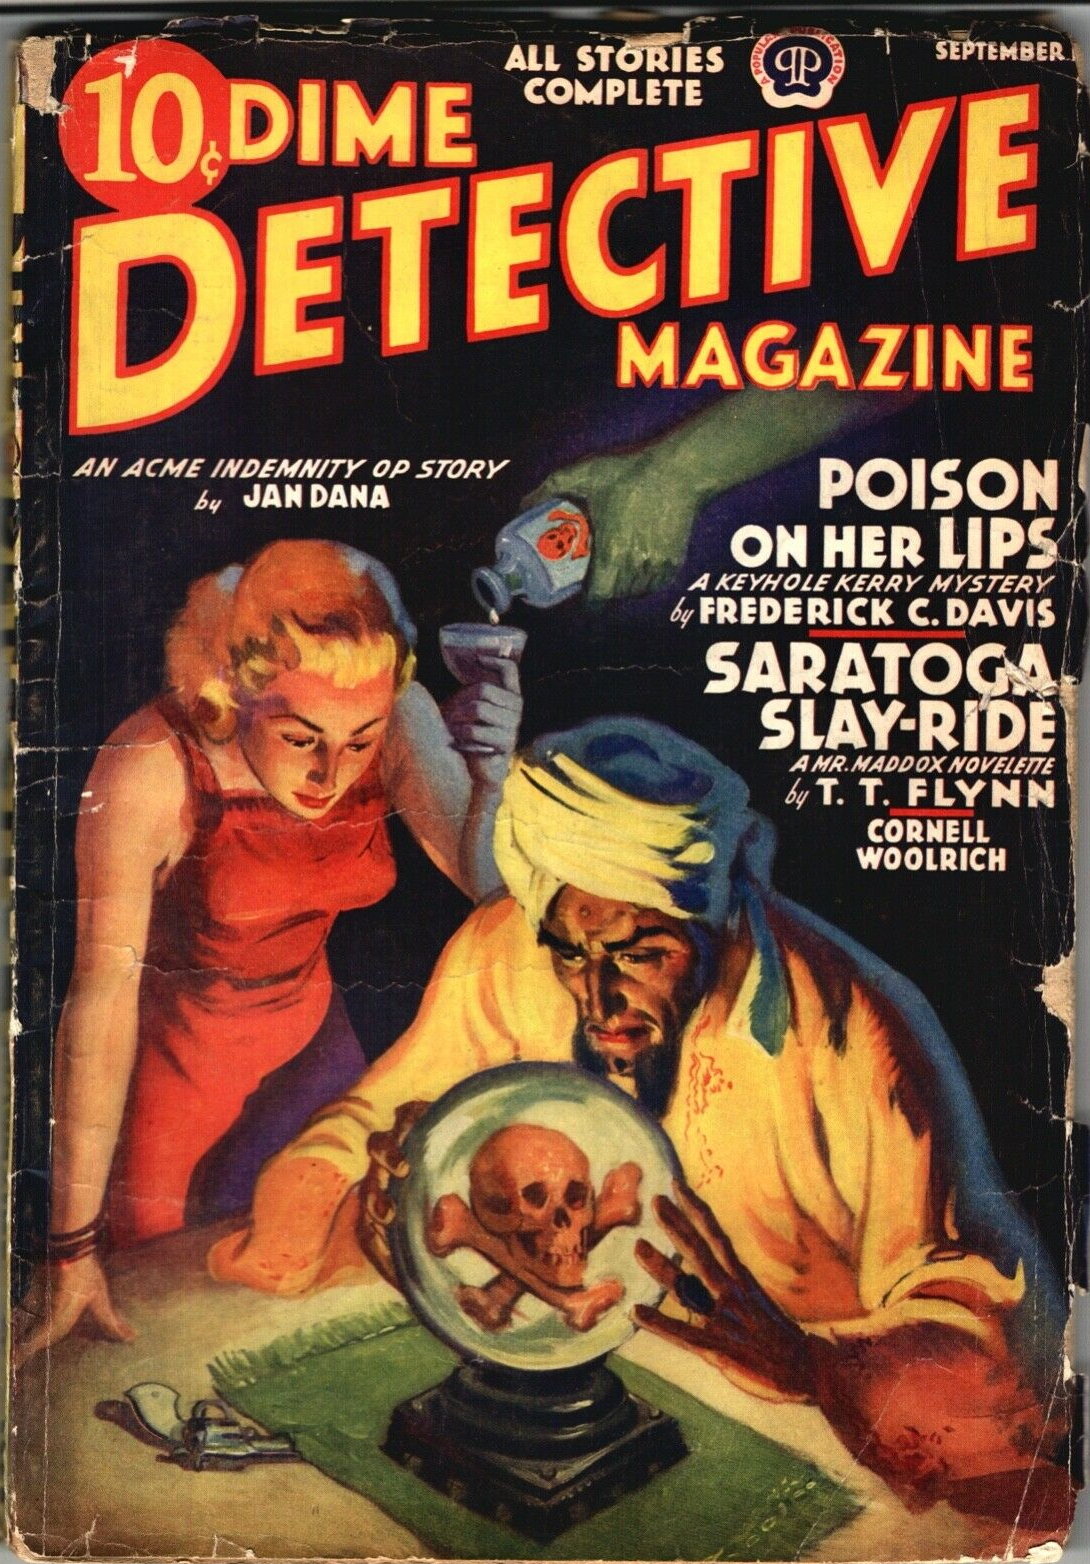 Dime Detective - September 1939